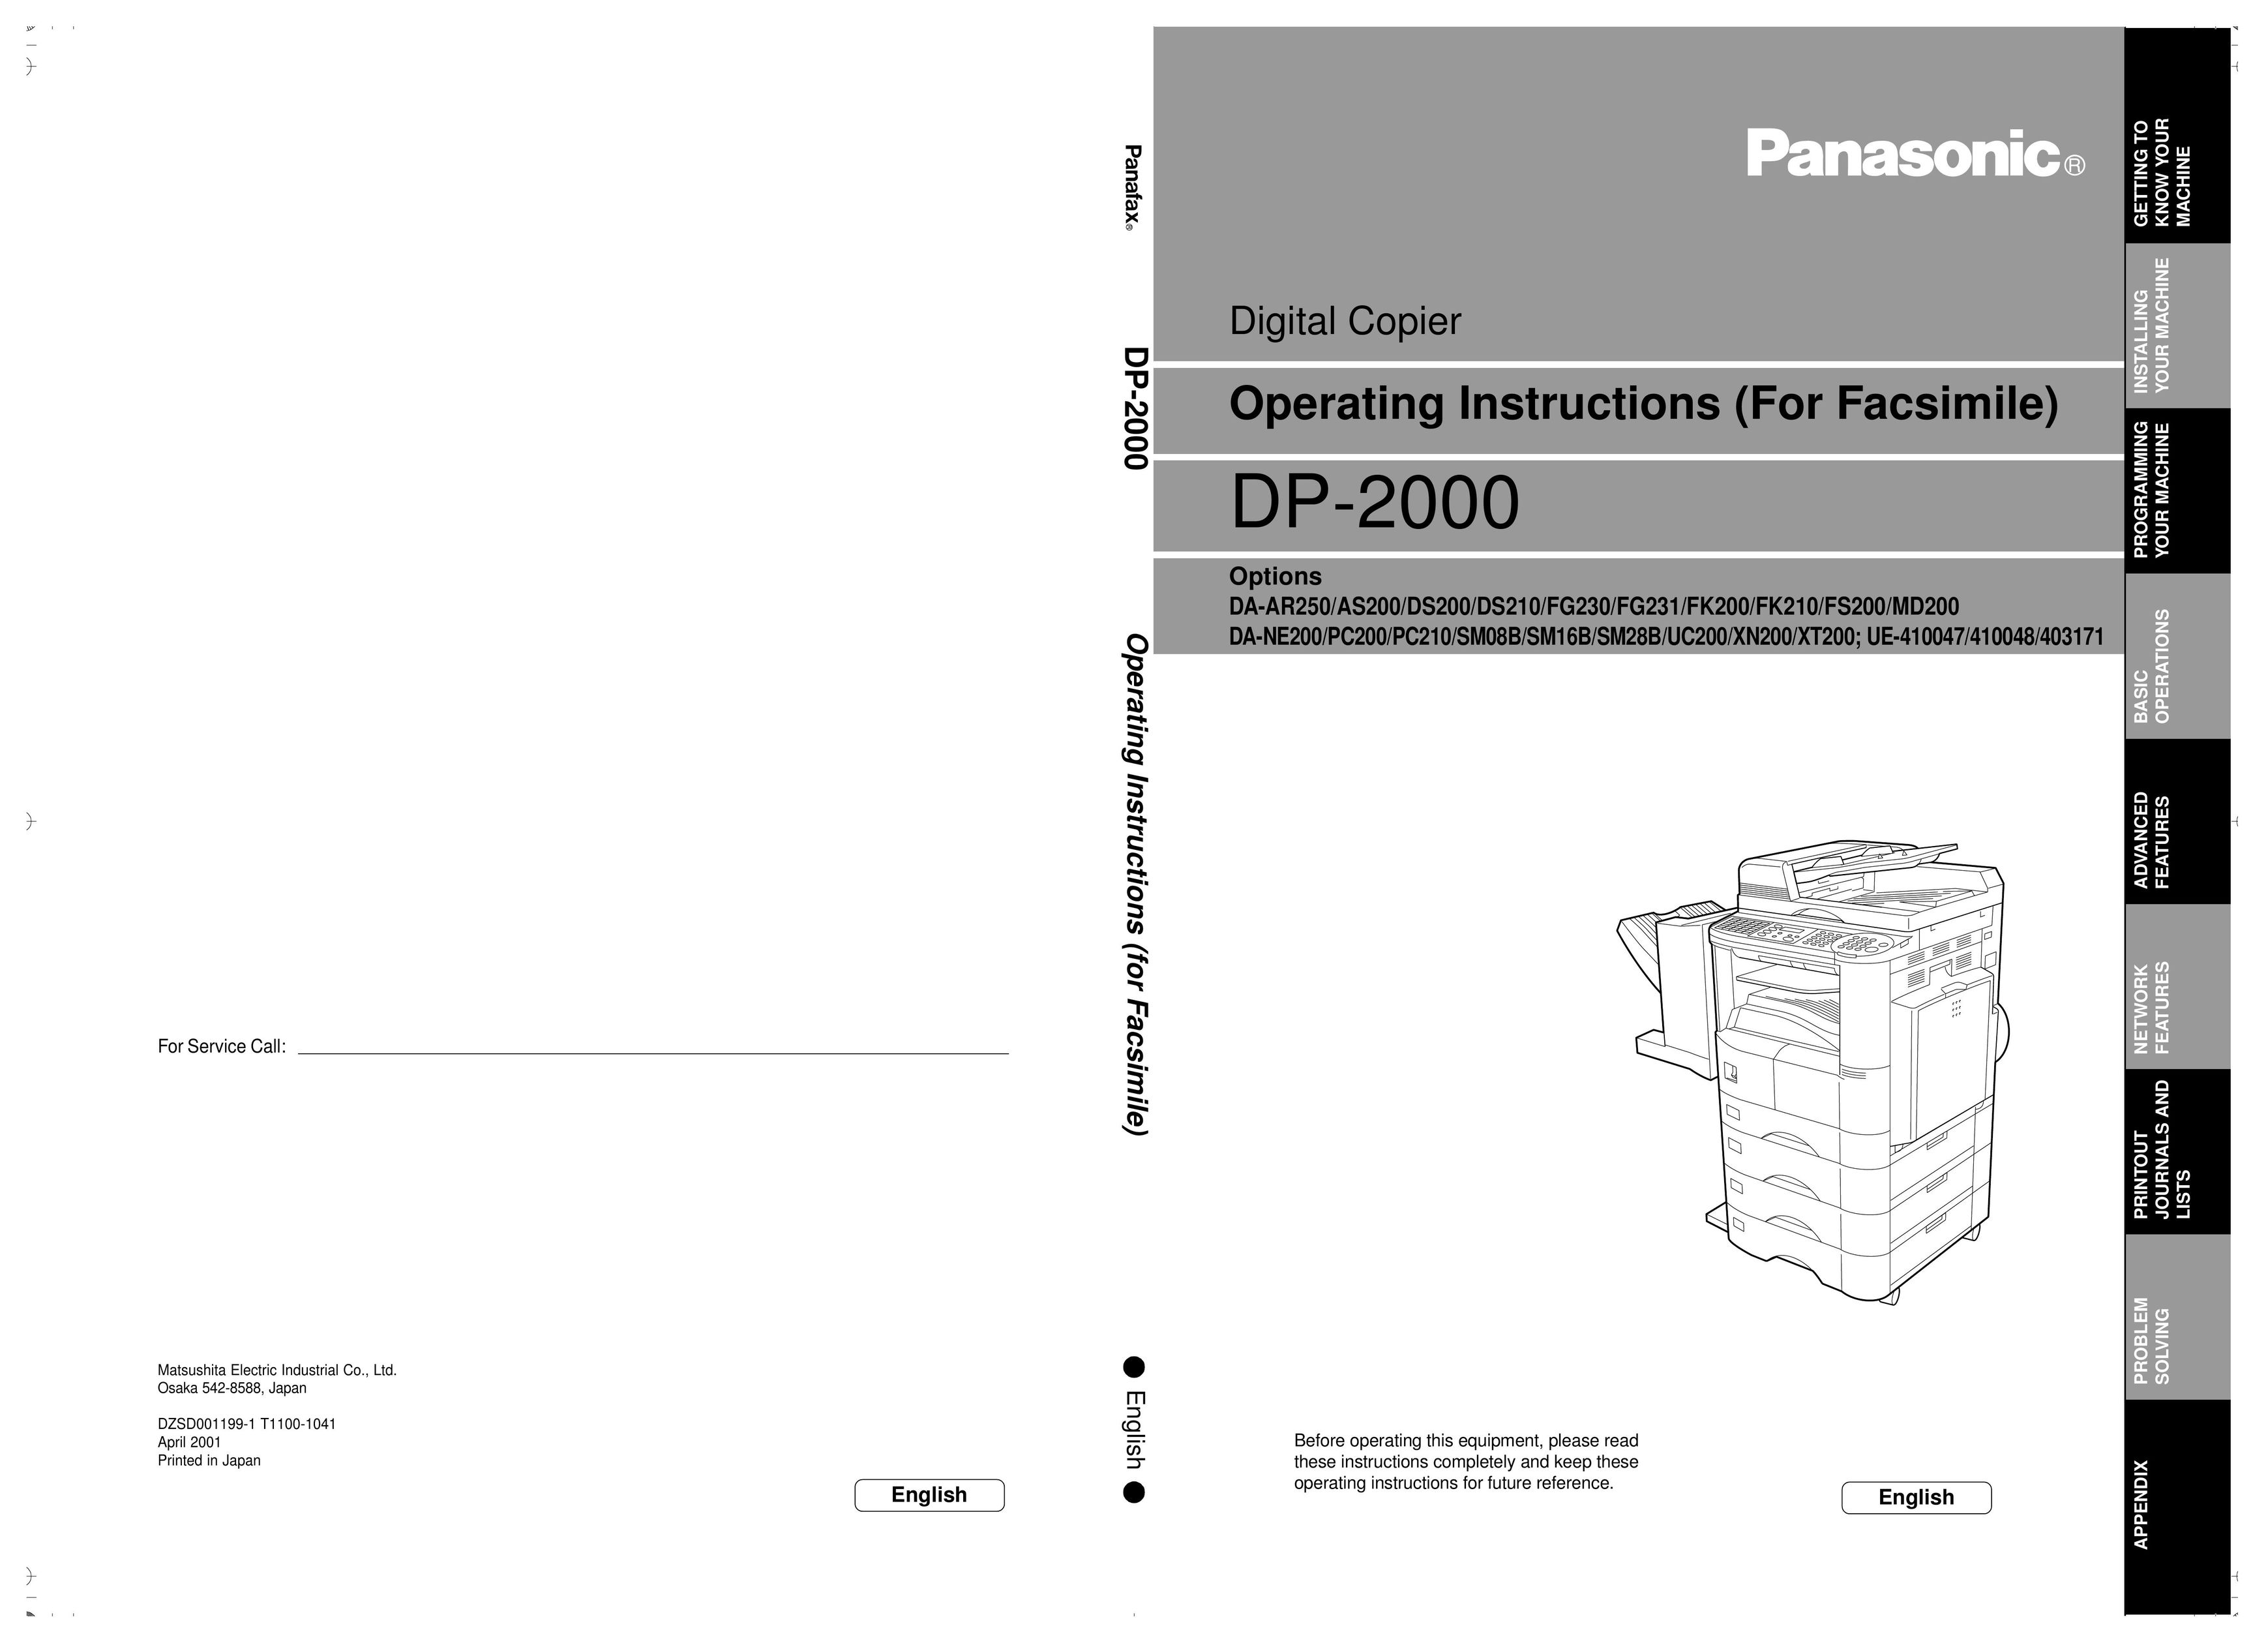 Panasonic AS200 All in One Printer User Manual